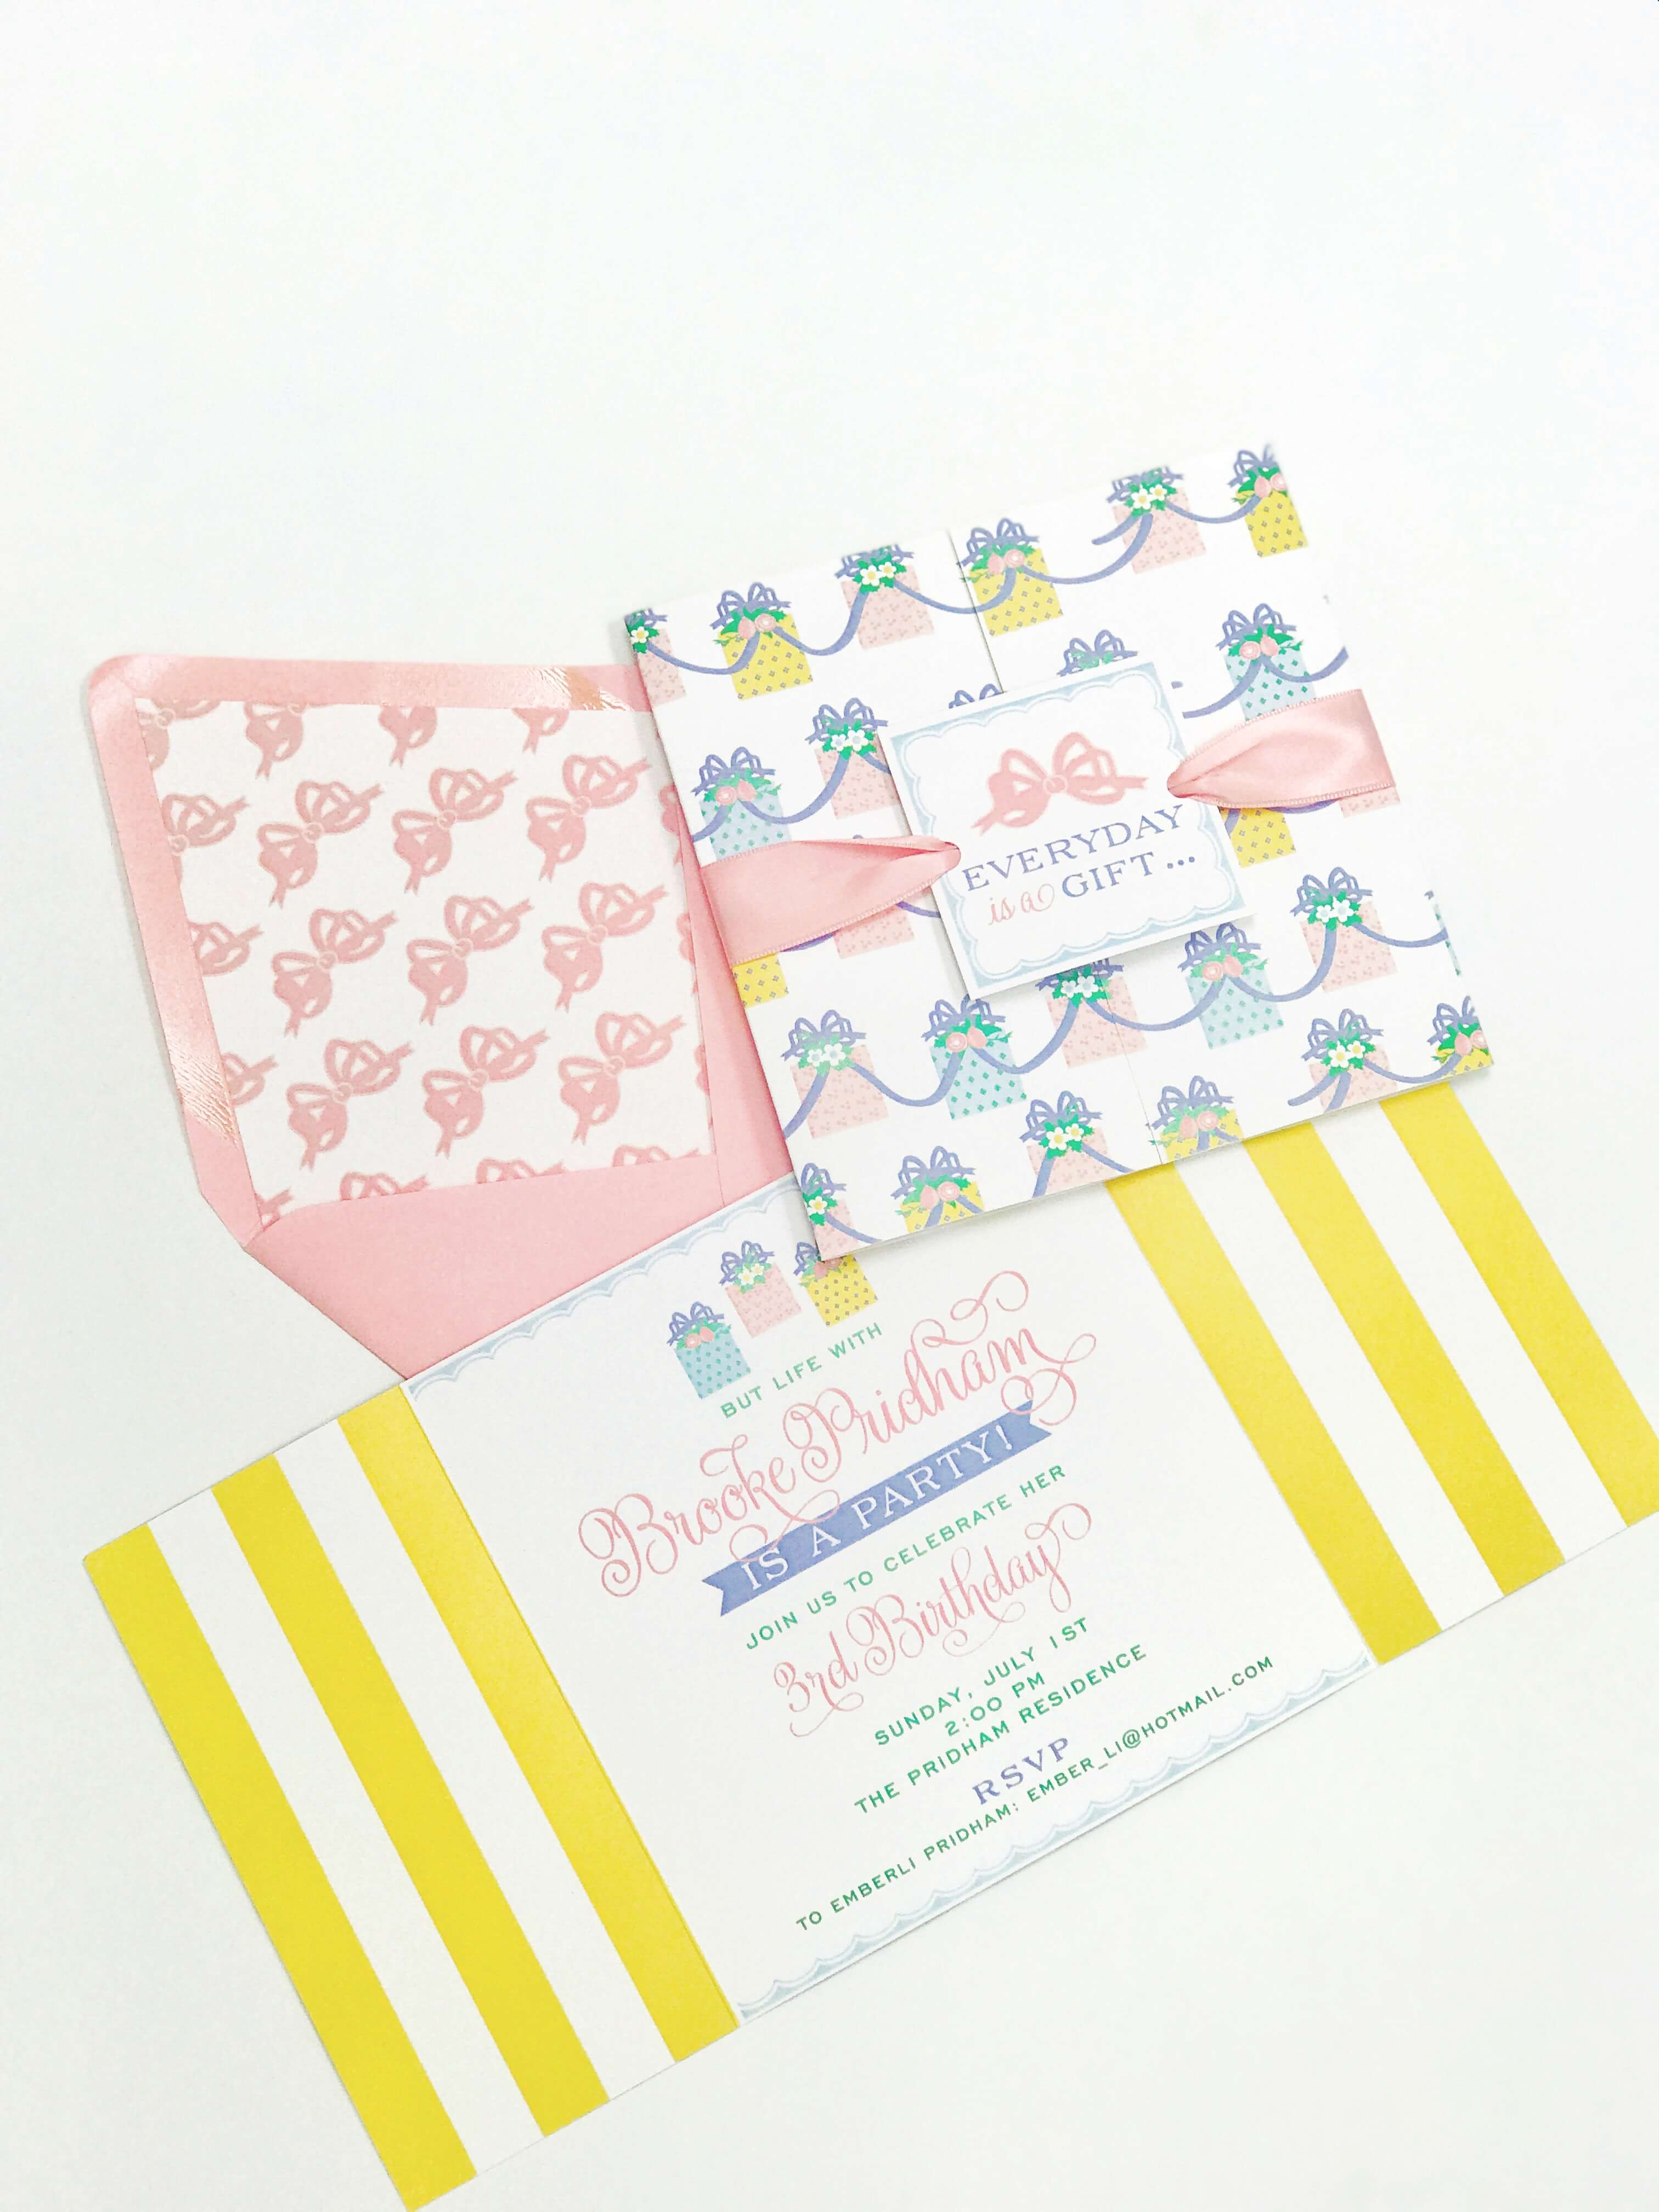 Beaufort Bonnet themed birthday invitations